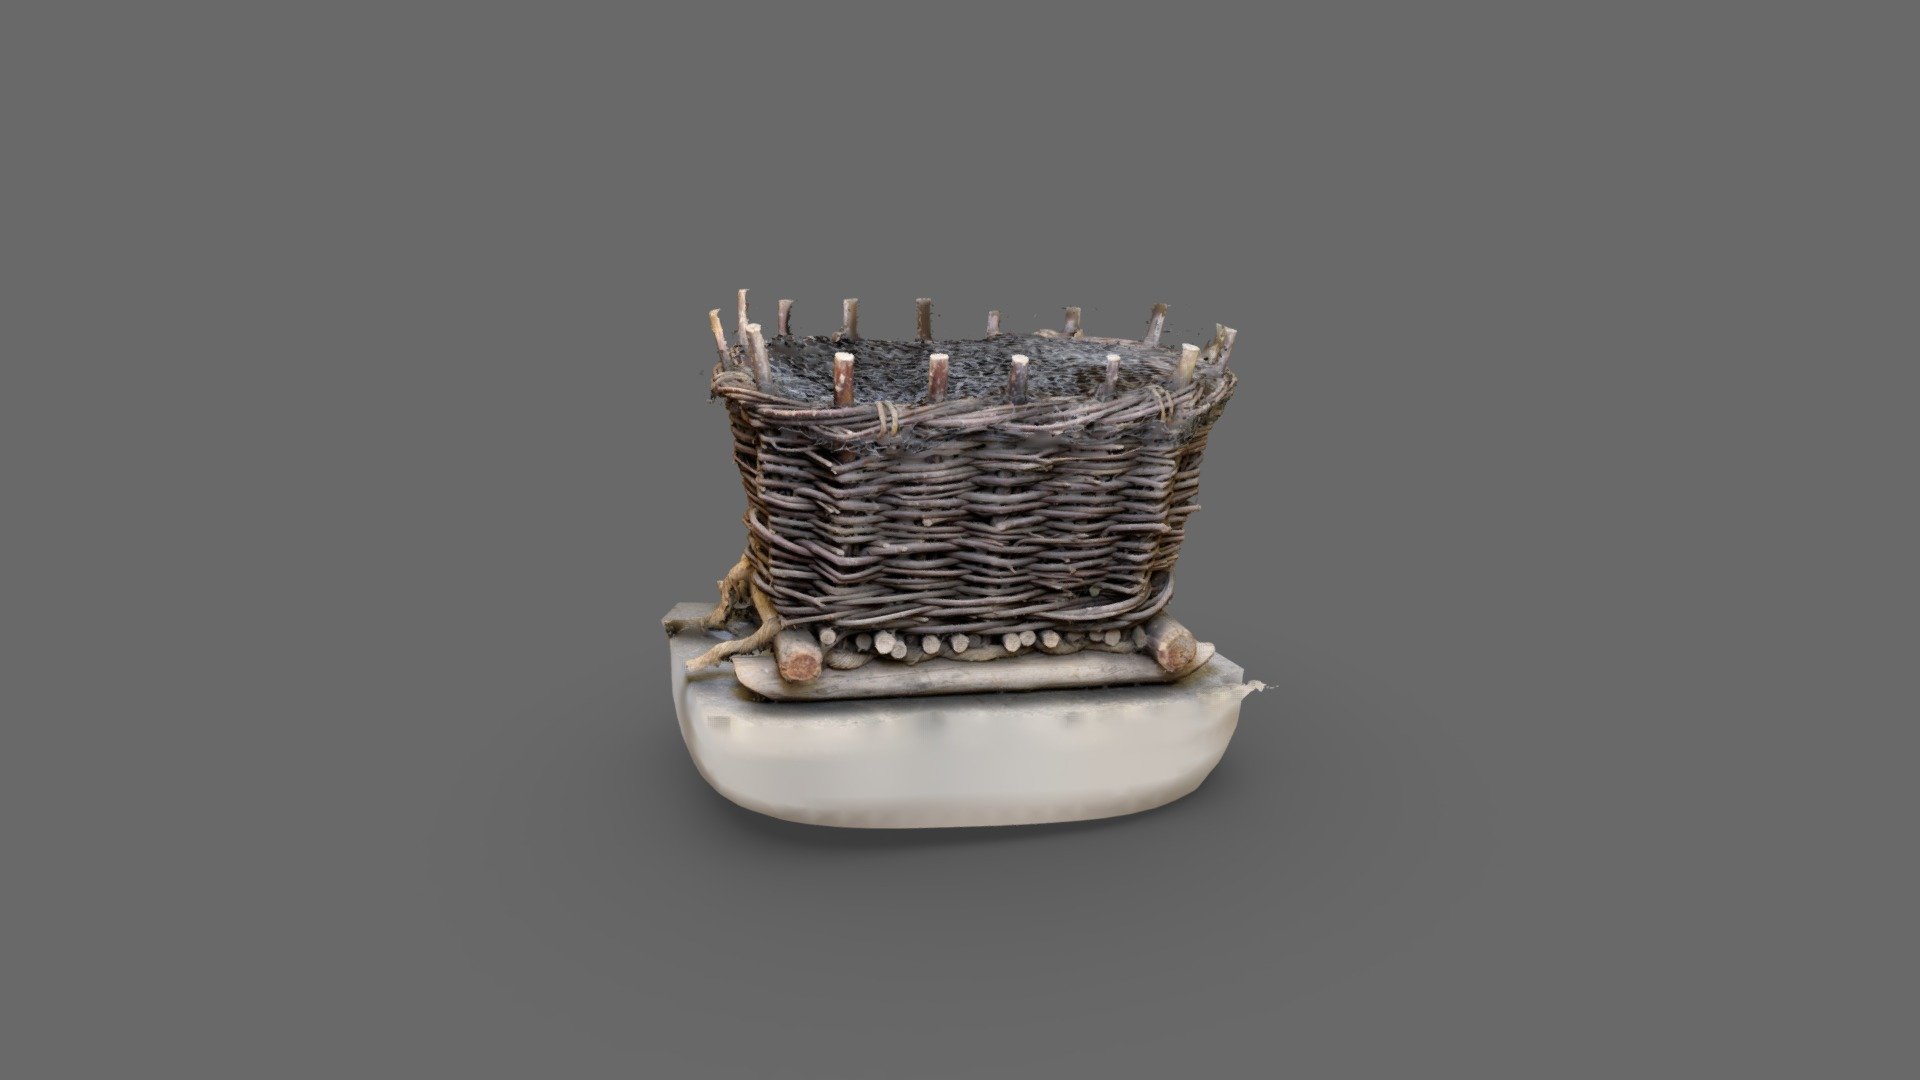 Basket with coal